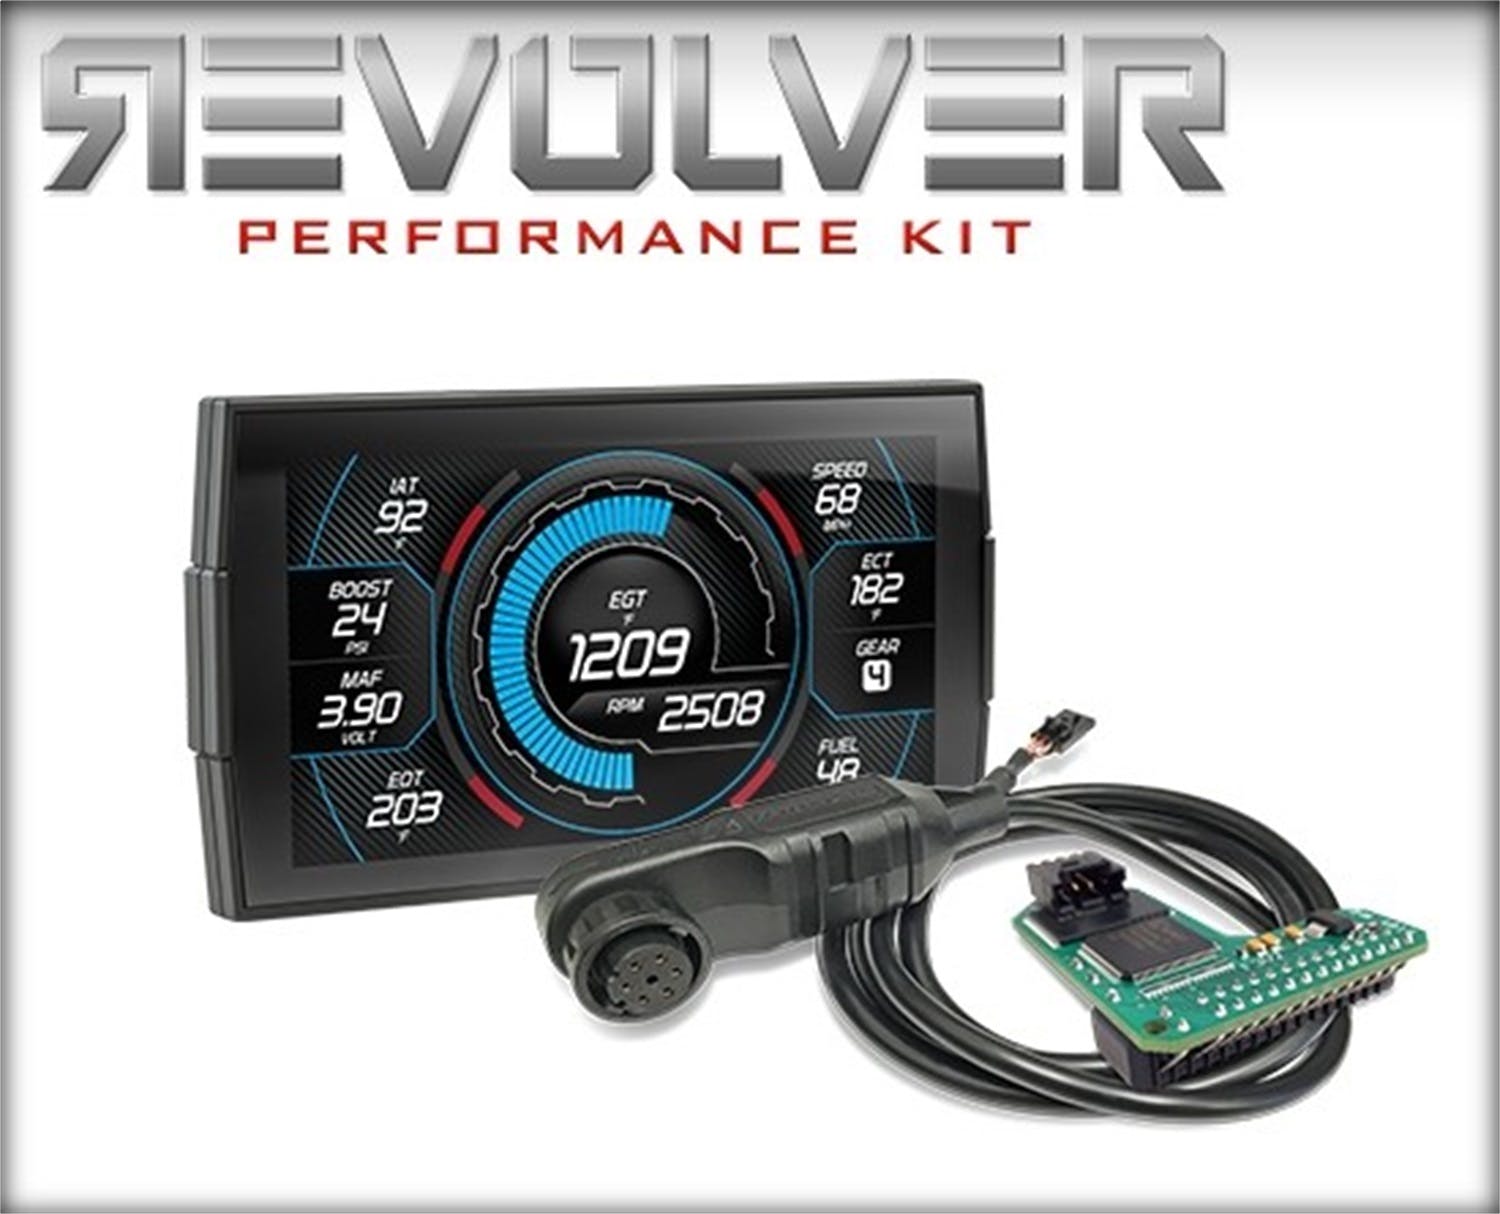 Edge Products 14109-3 Revolver Performance Kit